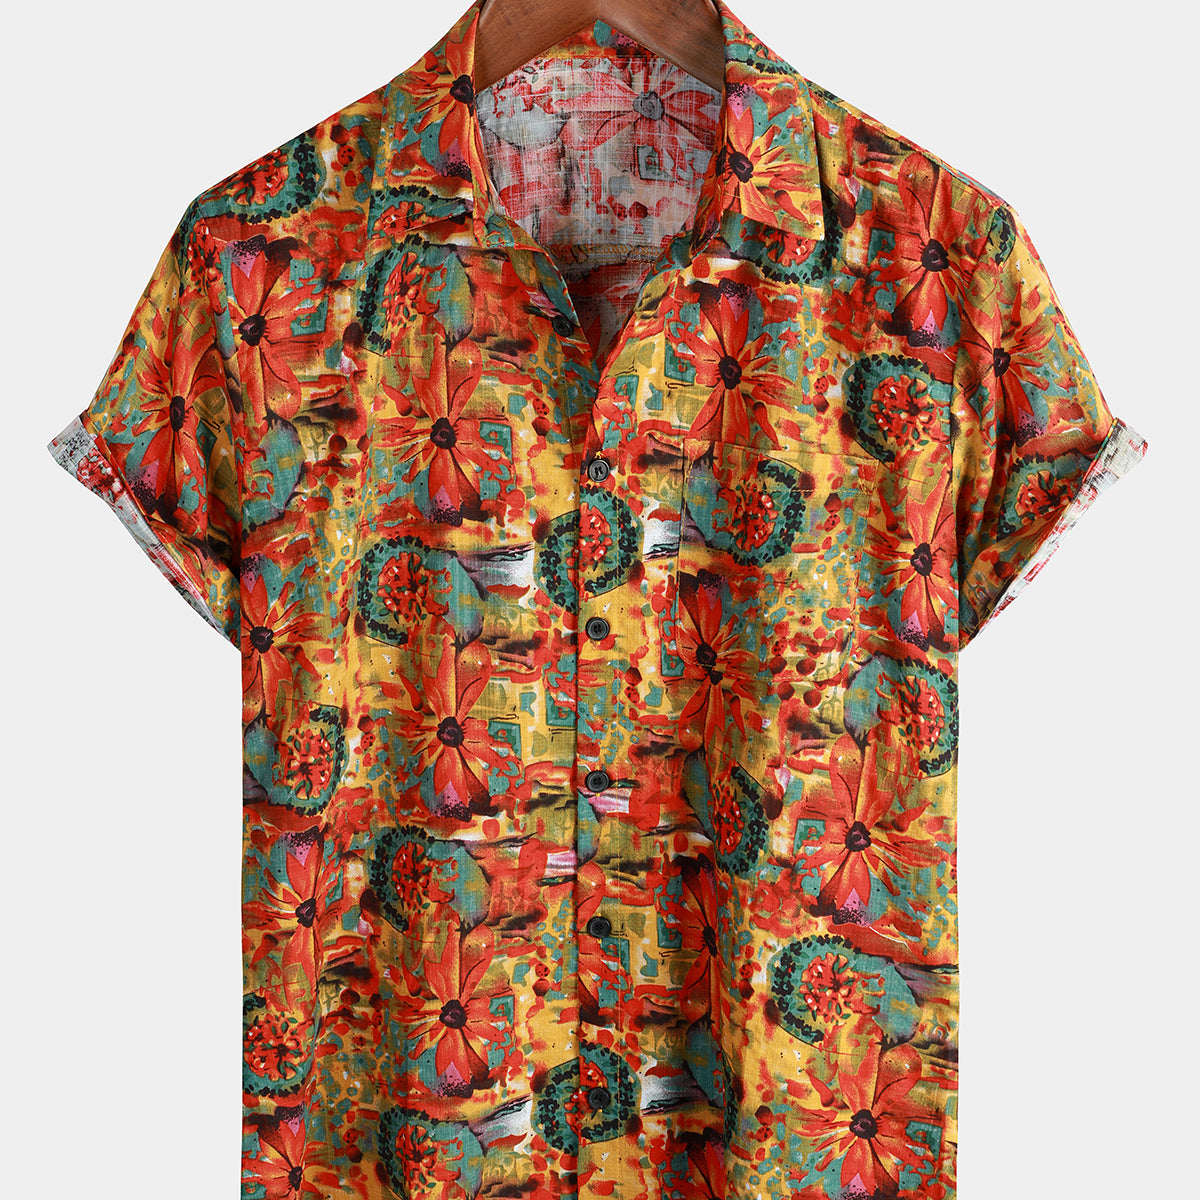 Men's Vintage Floral Print Summer Yellow Orange Breathable Cotton Button Bohemian Short Sleeve Shirt